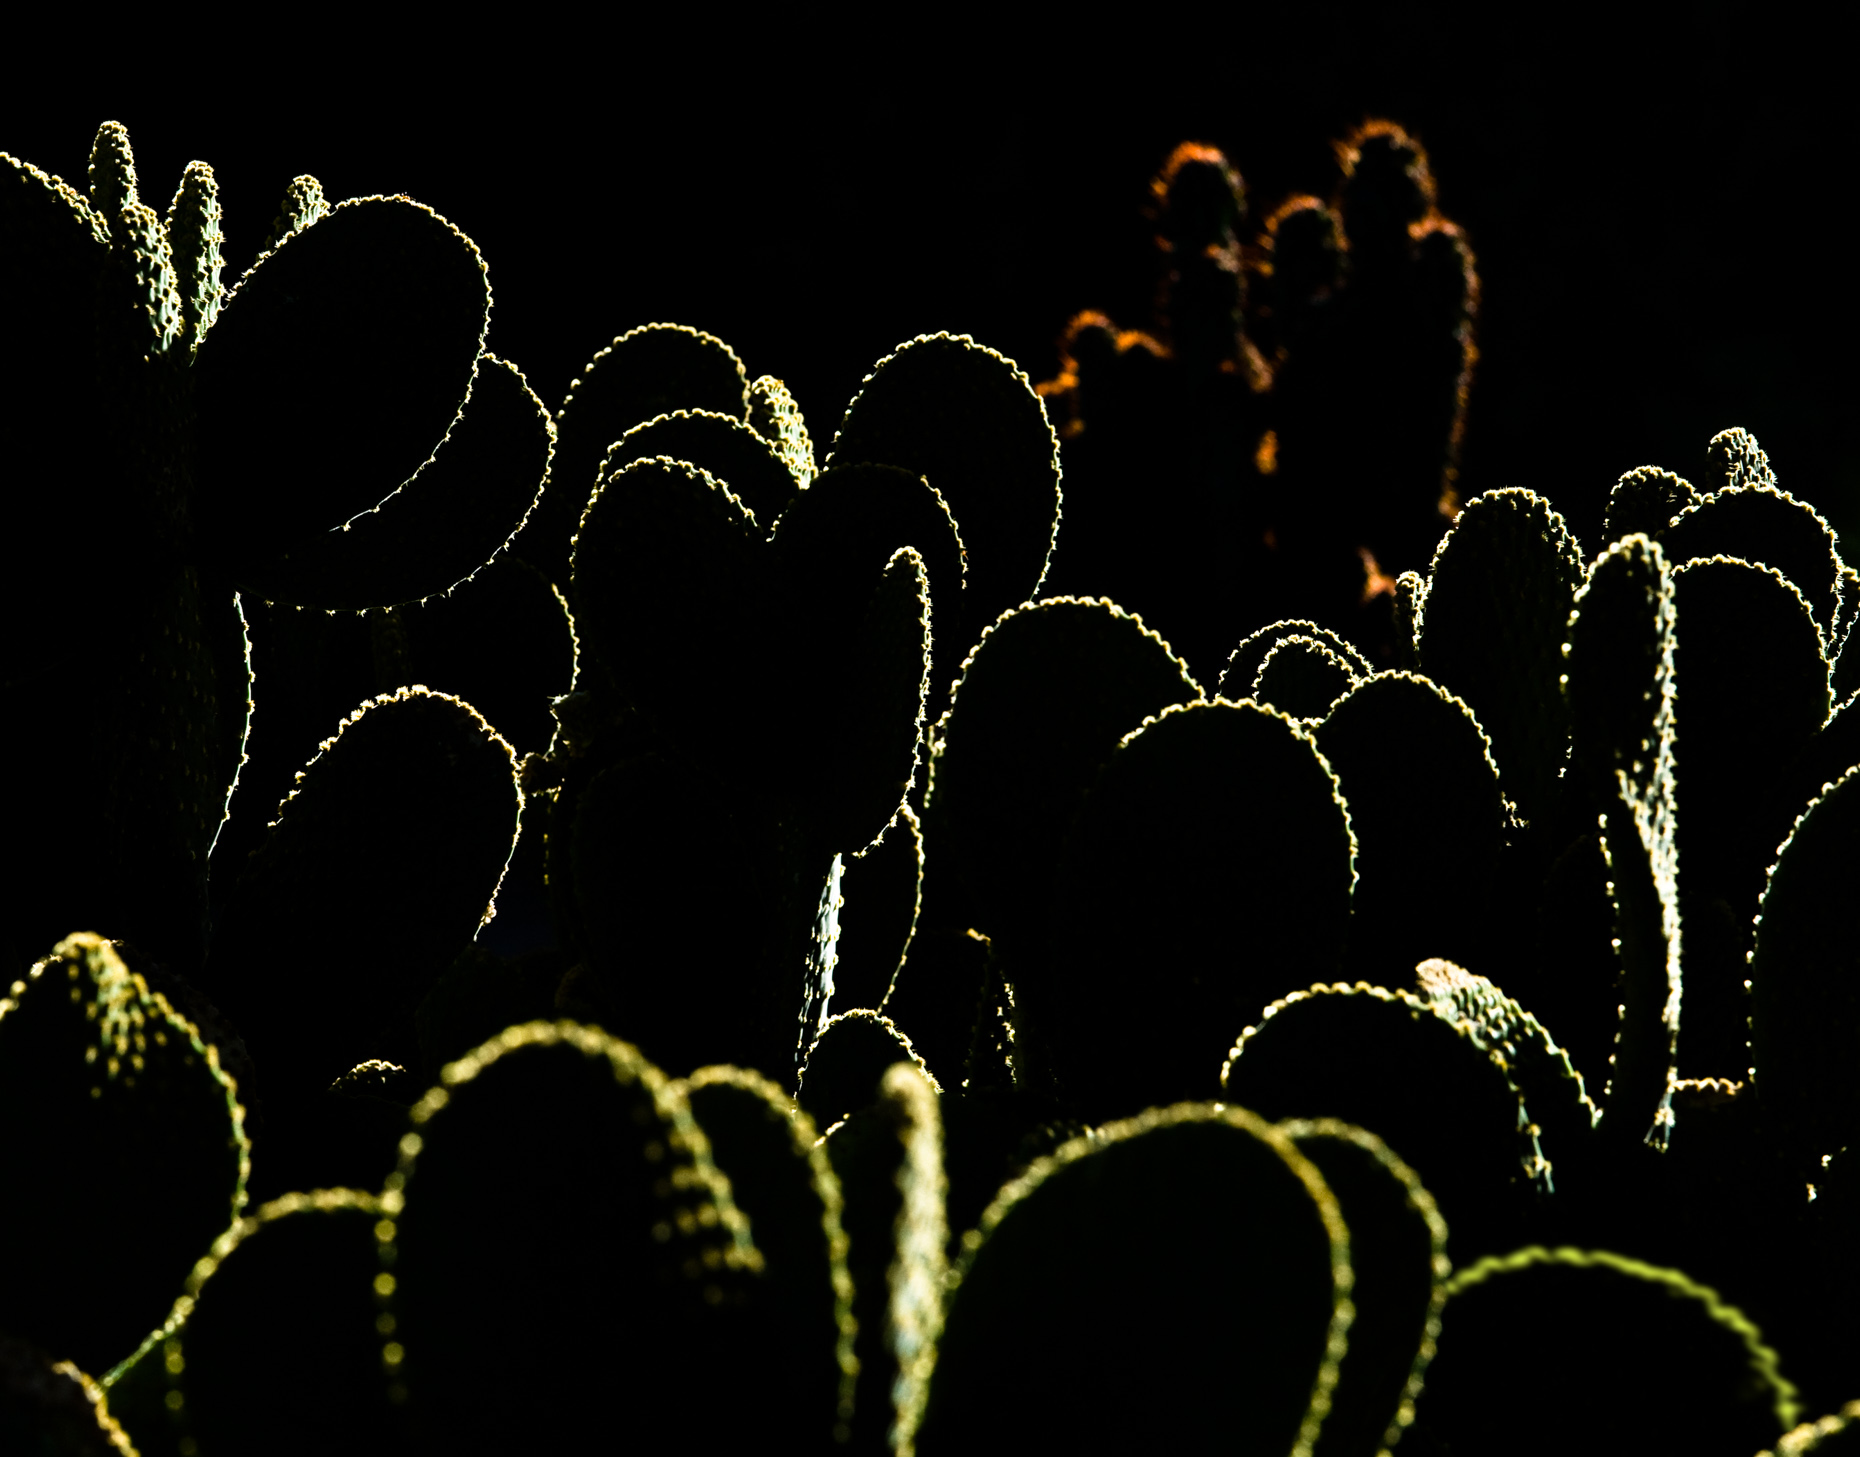 colour cacti